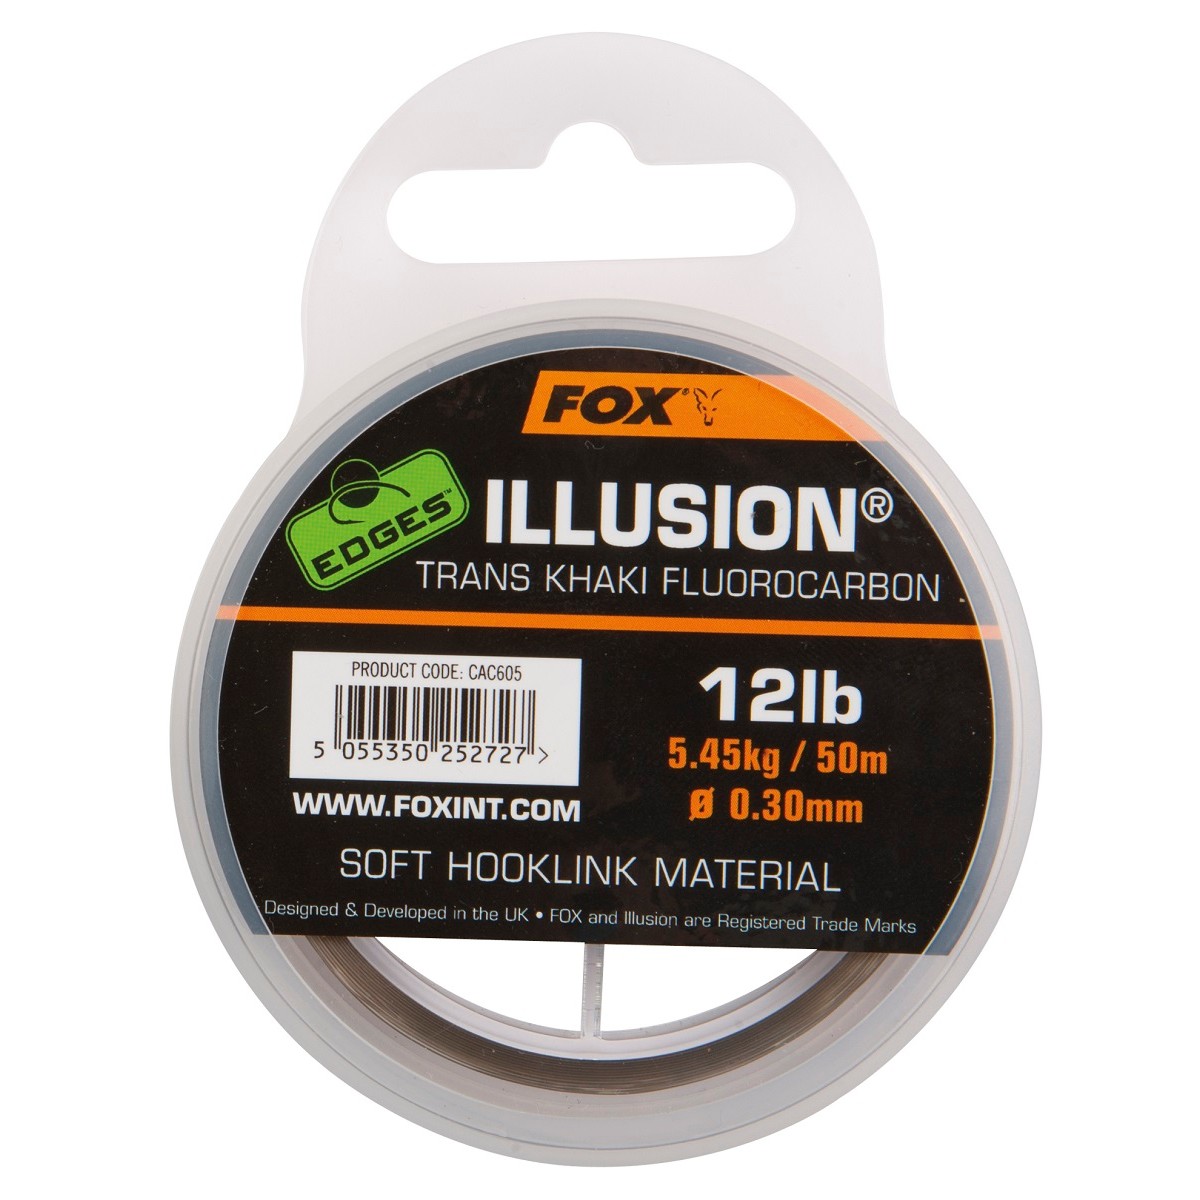 Fox EDGES Illusion Trans Khaki Fluorocarbon Soft Hooklink 50m